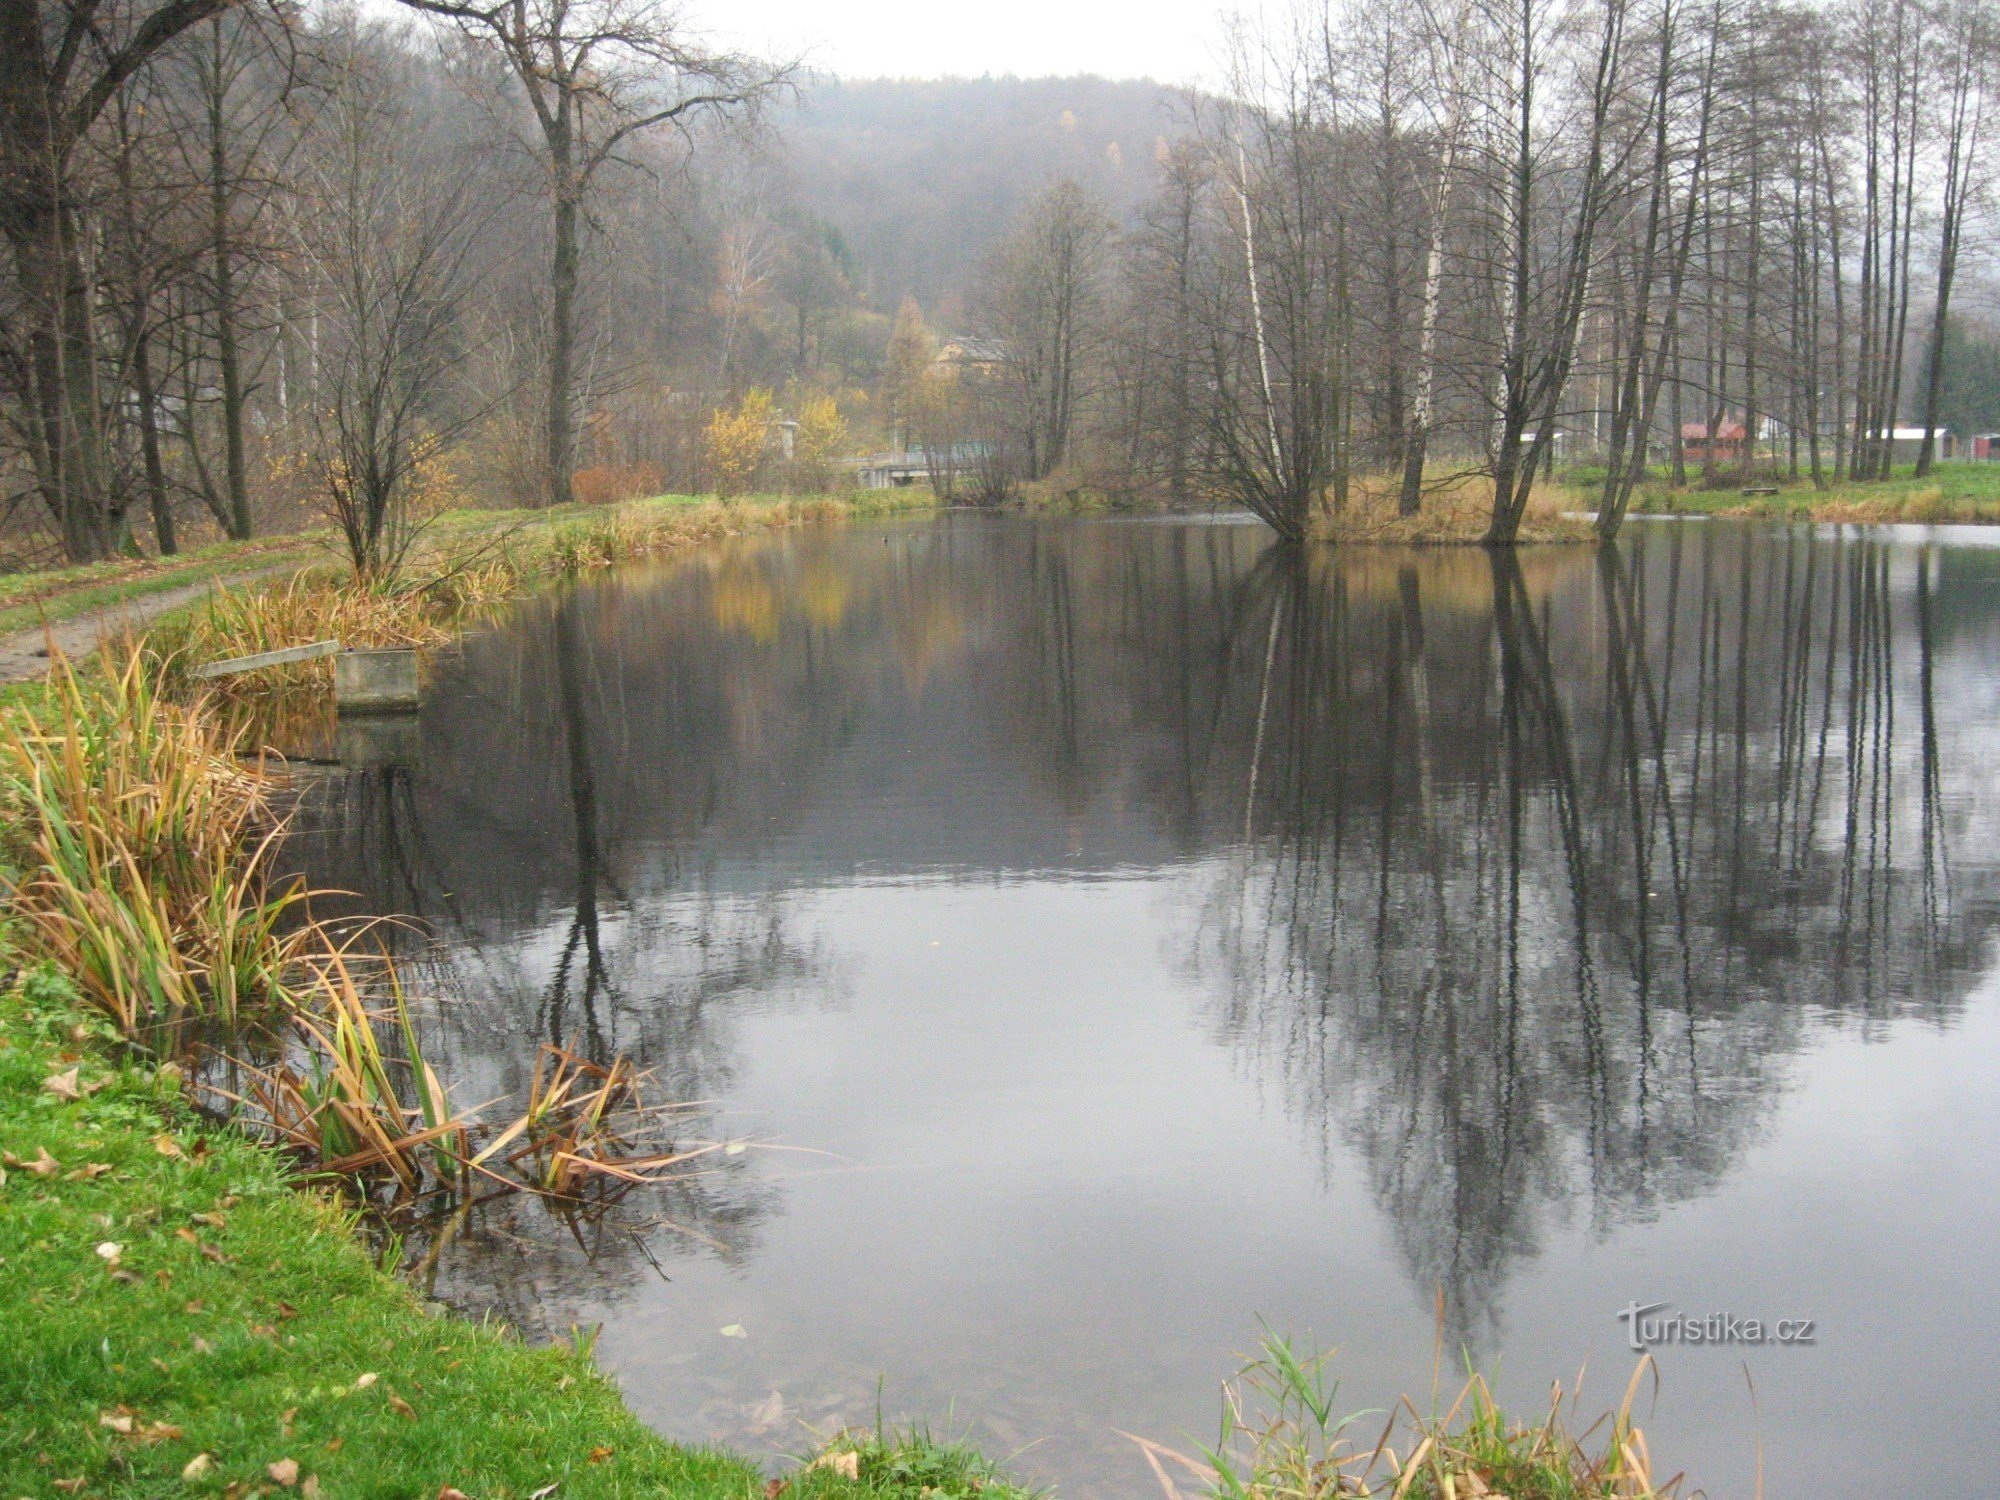 Visit to the Vízmberk estate in 2008